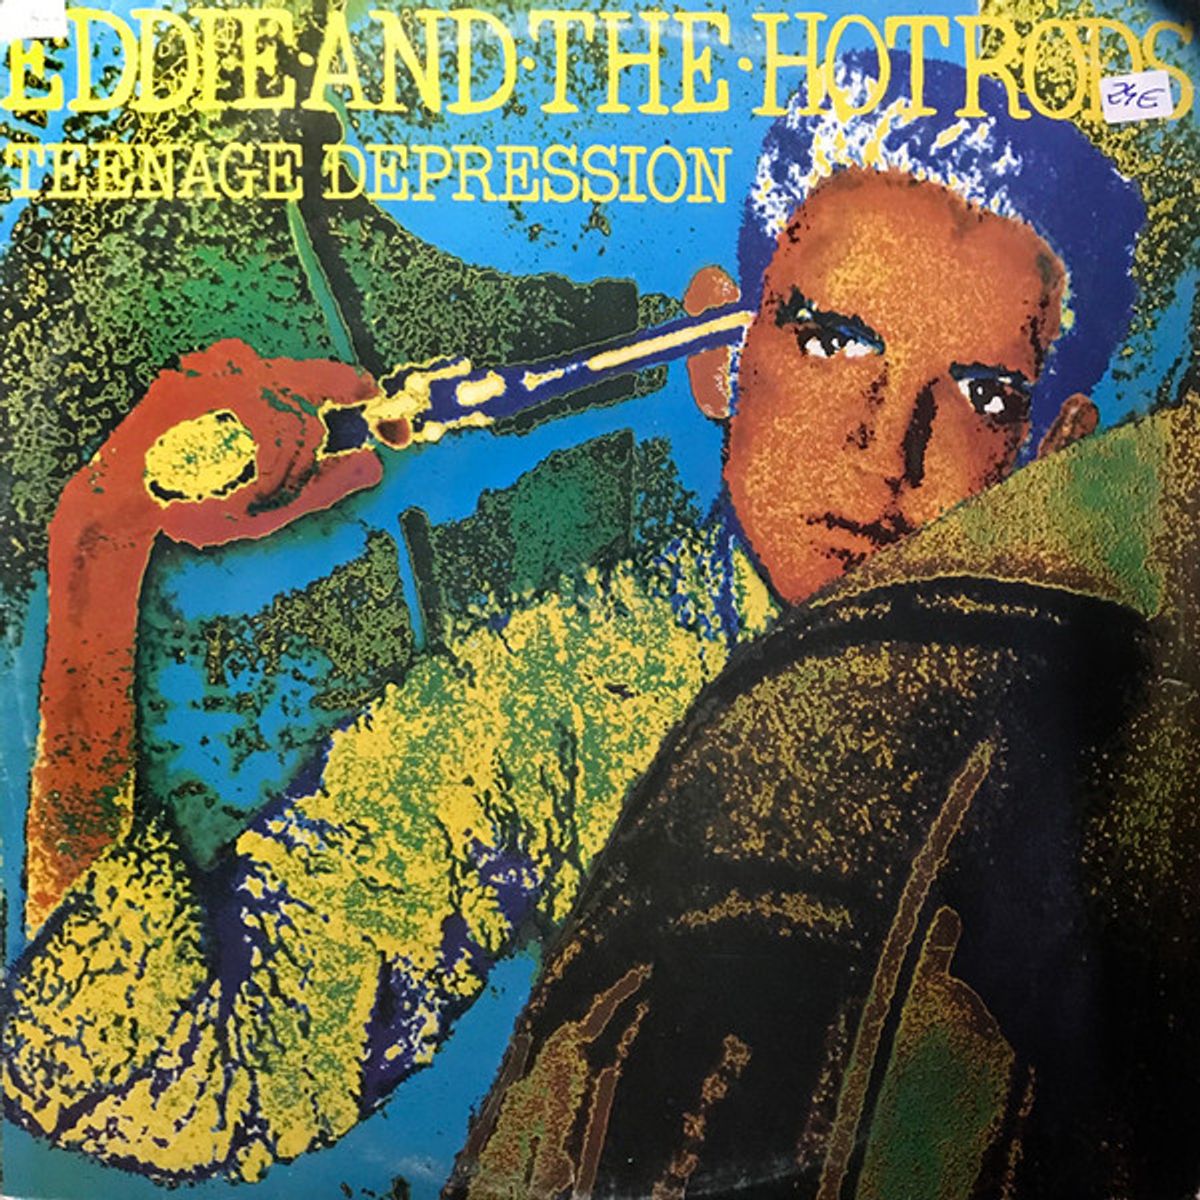 #Pubrock - Eddie & The Hot Rods - Teenage Depression (1976)